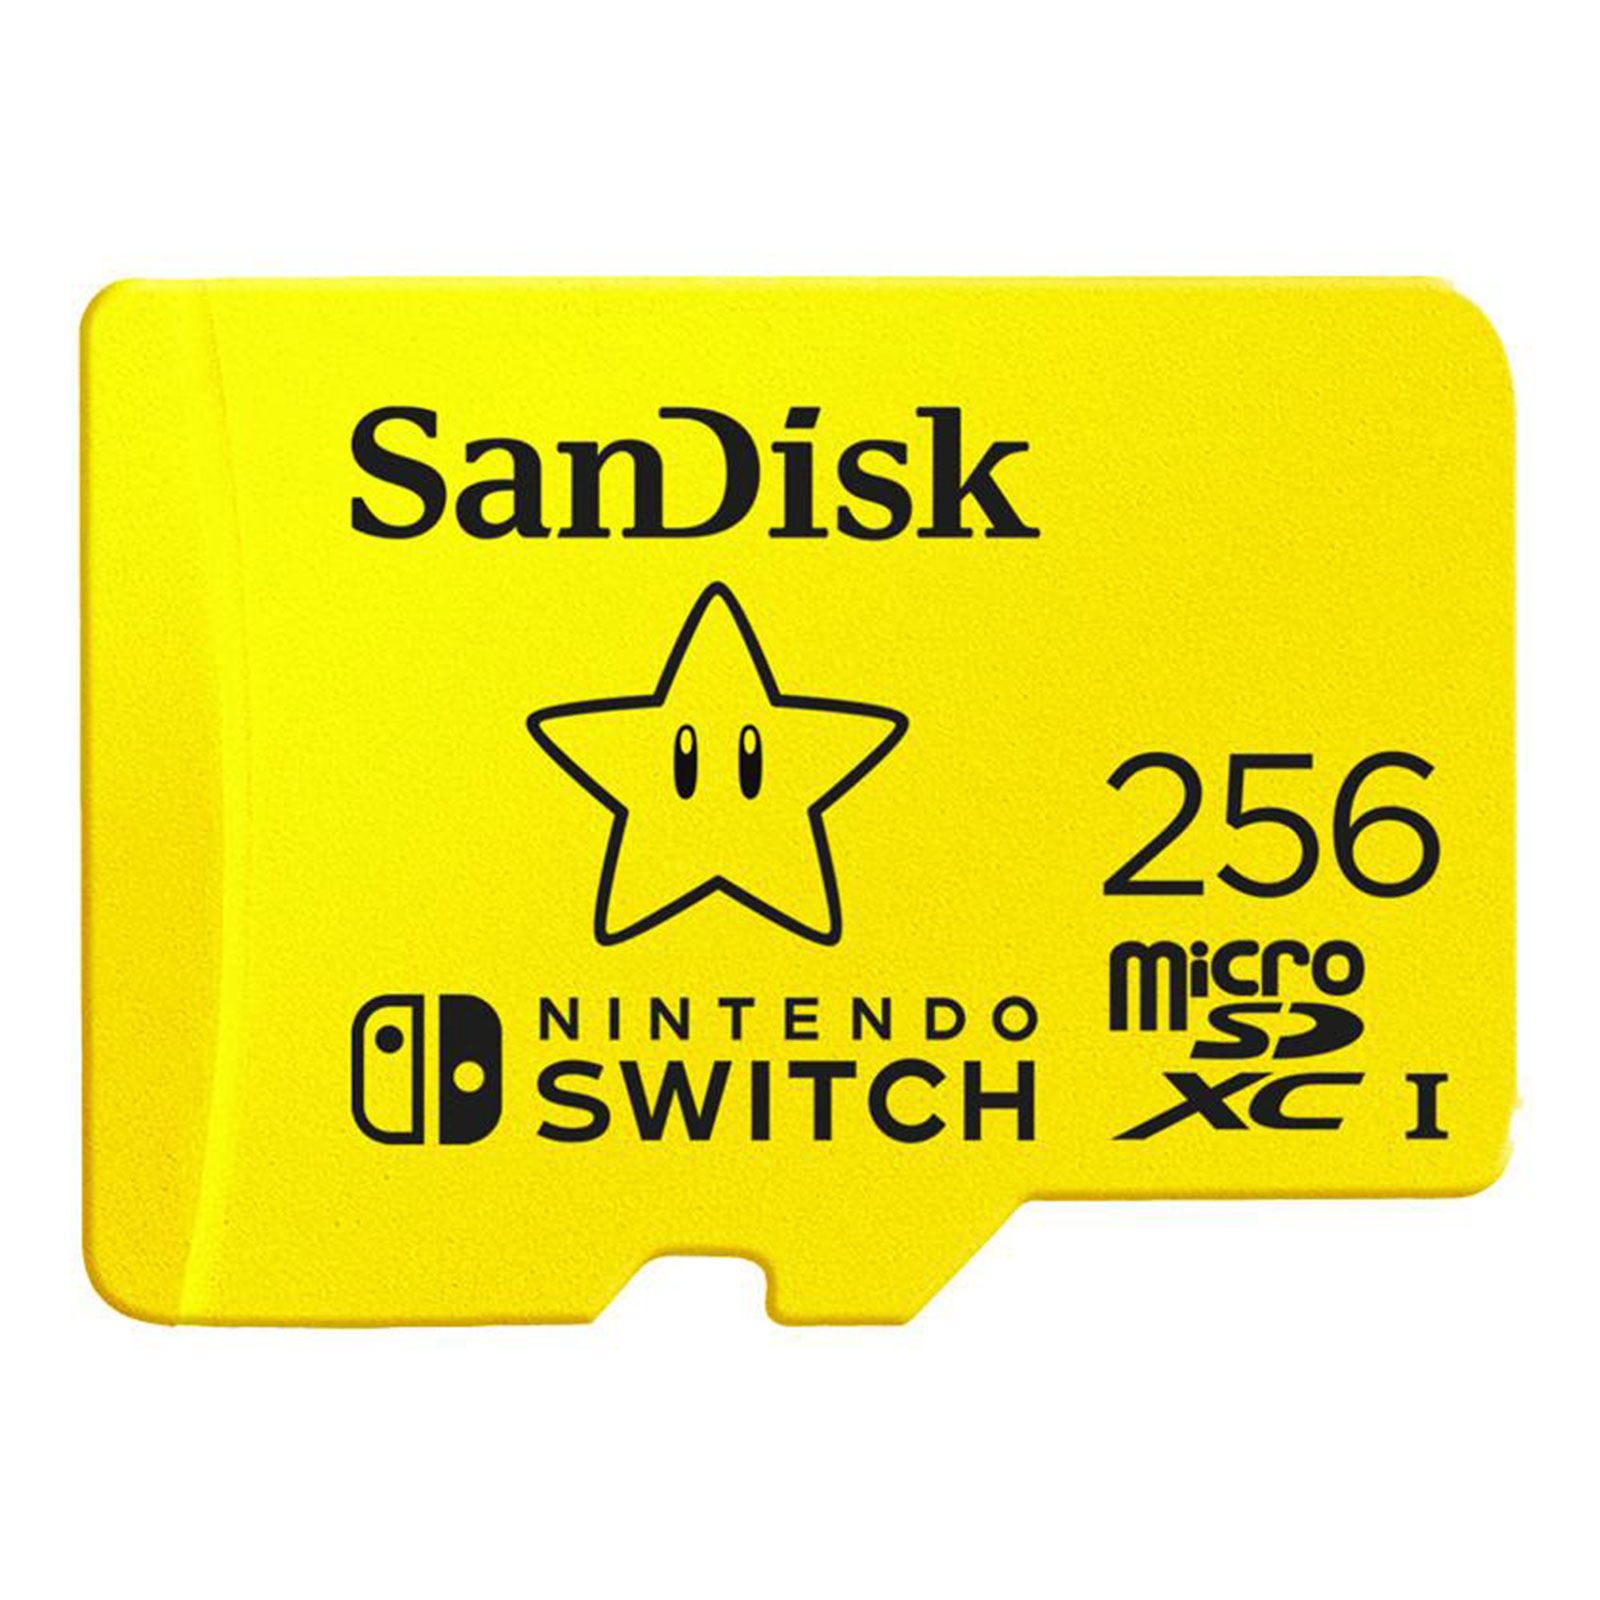 sandisk microSDXC Extreme 256GB U3 Nintendo Switch